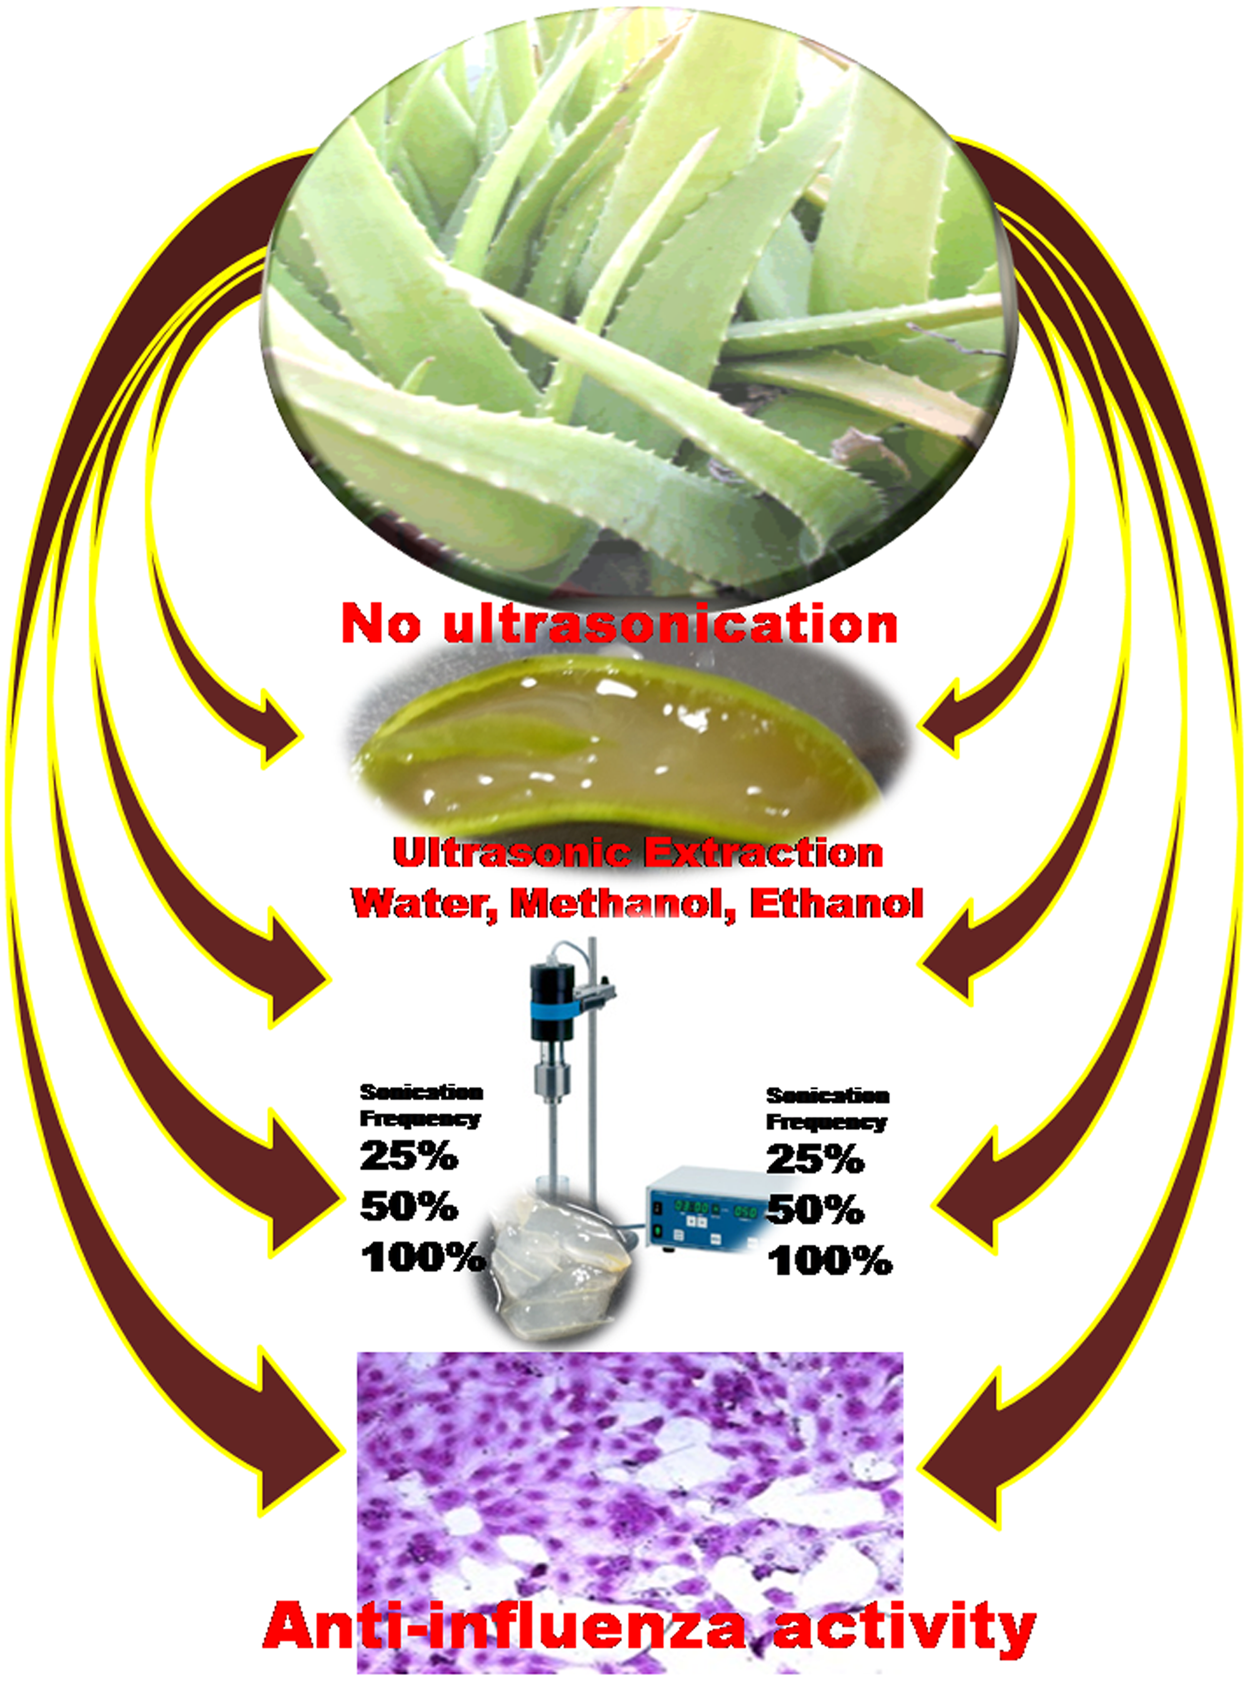 Ultrasound mediated accelerated Anti-influenza activity of Aloe vera |  Scientific Reports